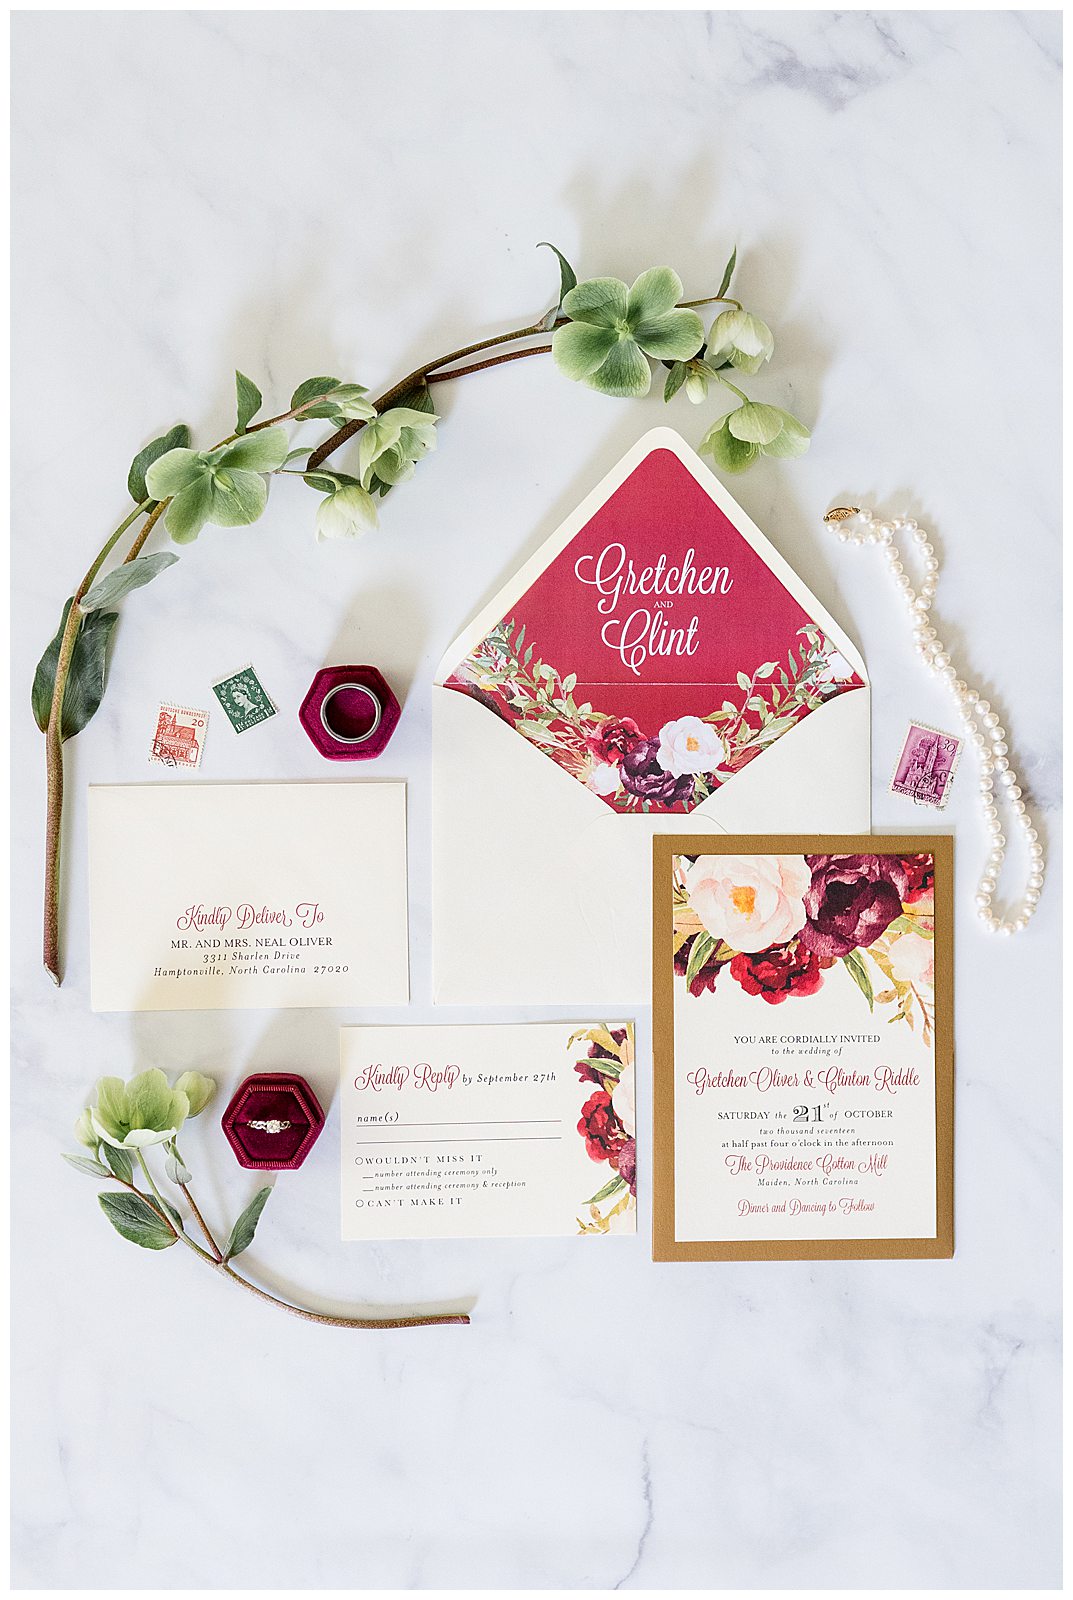 wedding invitation suite by Anna Howe Design, photographed by Jenn Eddine Photography, Inc.